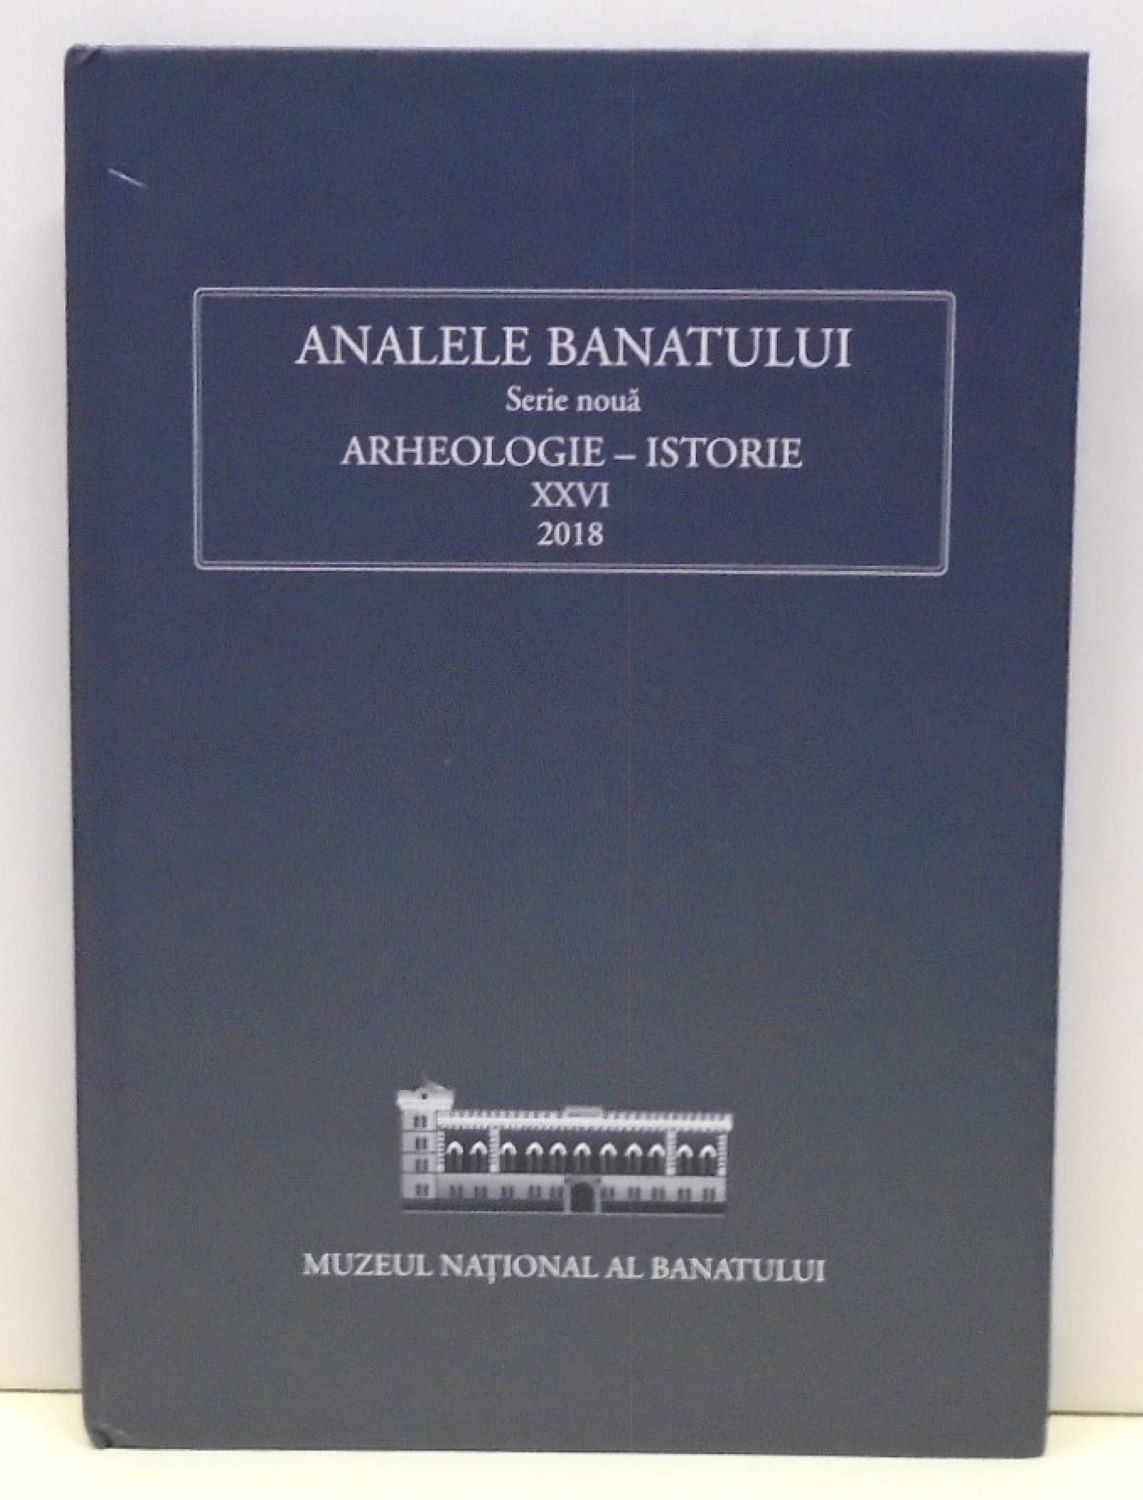 Analele Banatului. Arheologie-Istorie 2018/36. (Rippl-Rónai Múzeum CC BY-NC-ND)